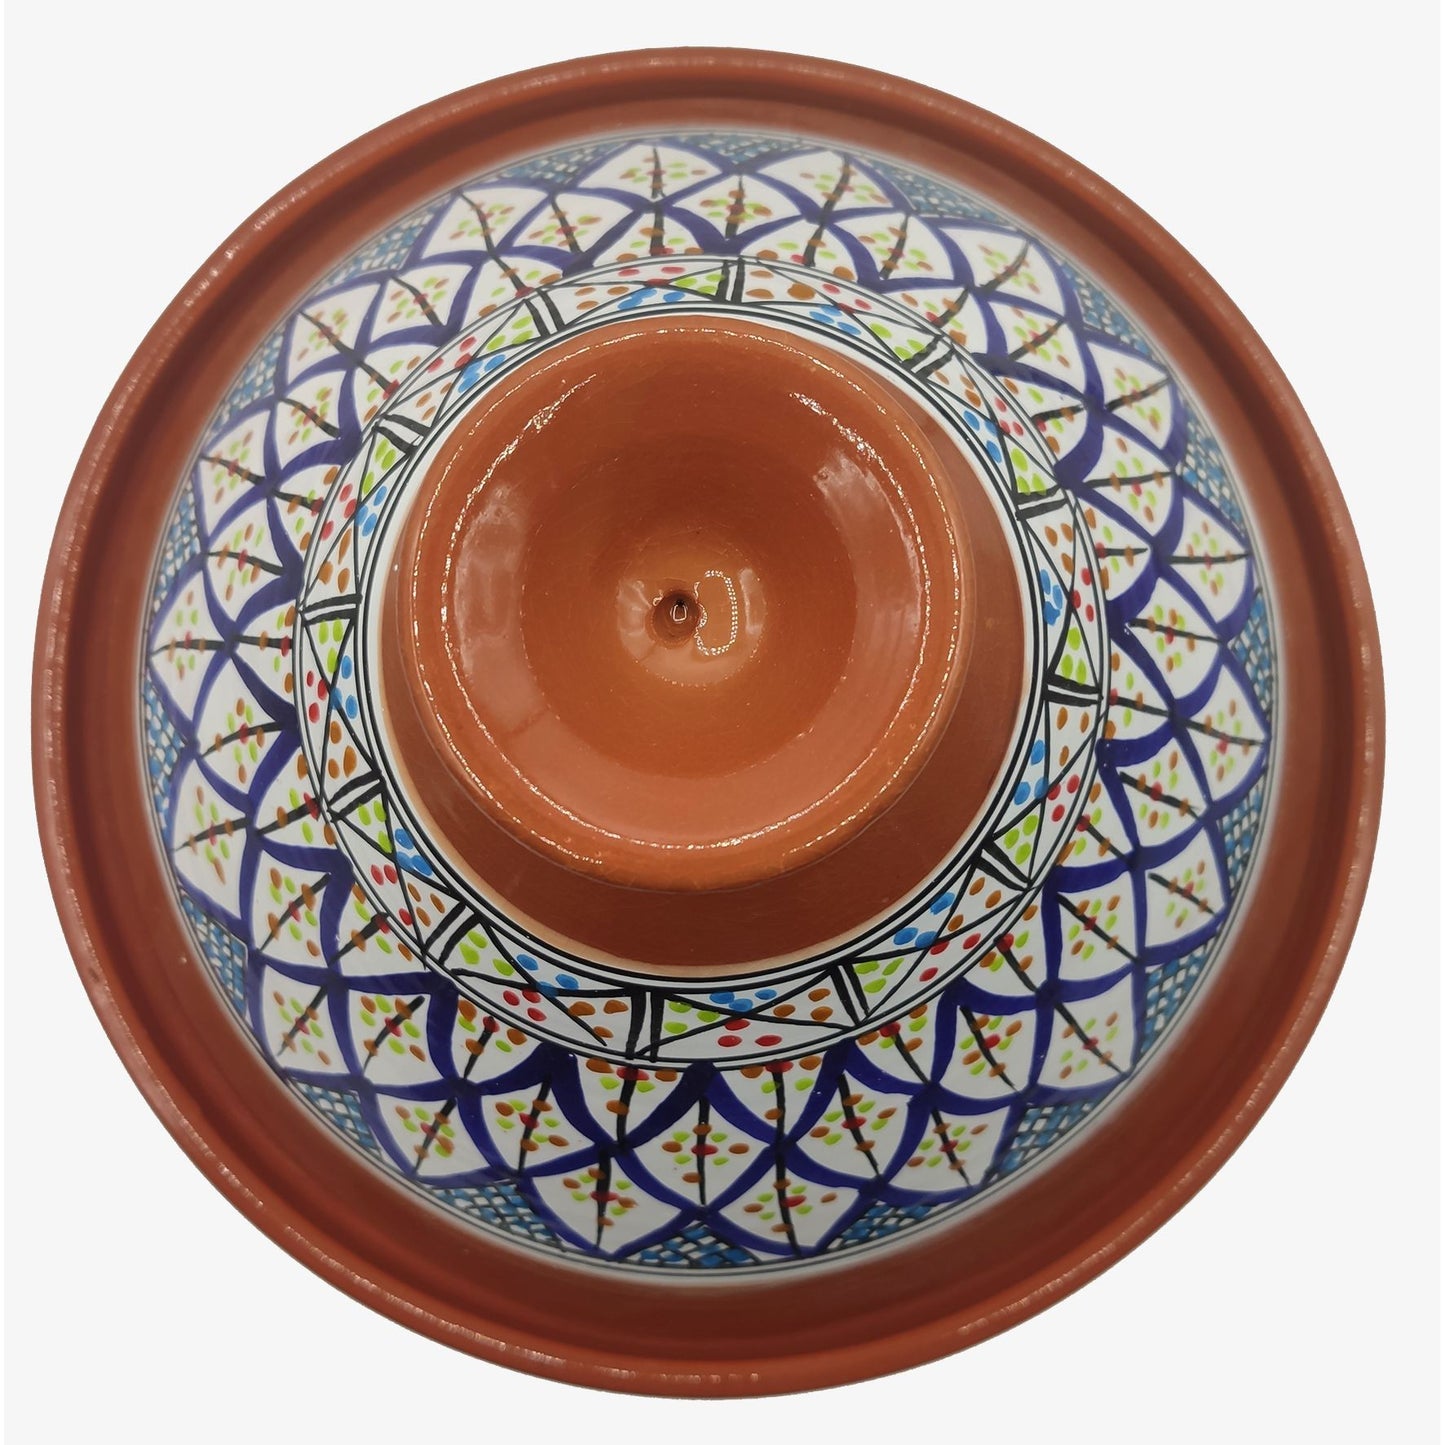 Tajine Terracotta Pot Etnisch Marokkaanse Tunesische Schaal XL 32cm 2910201100